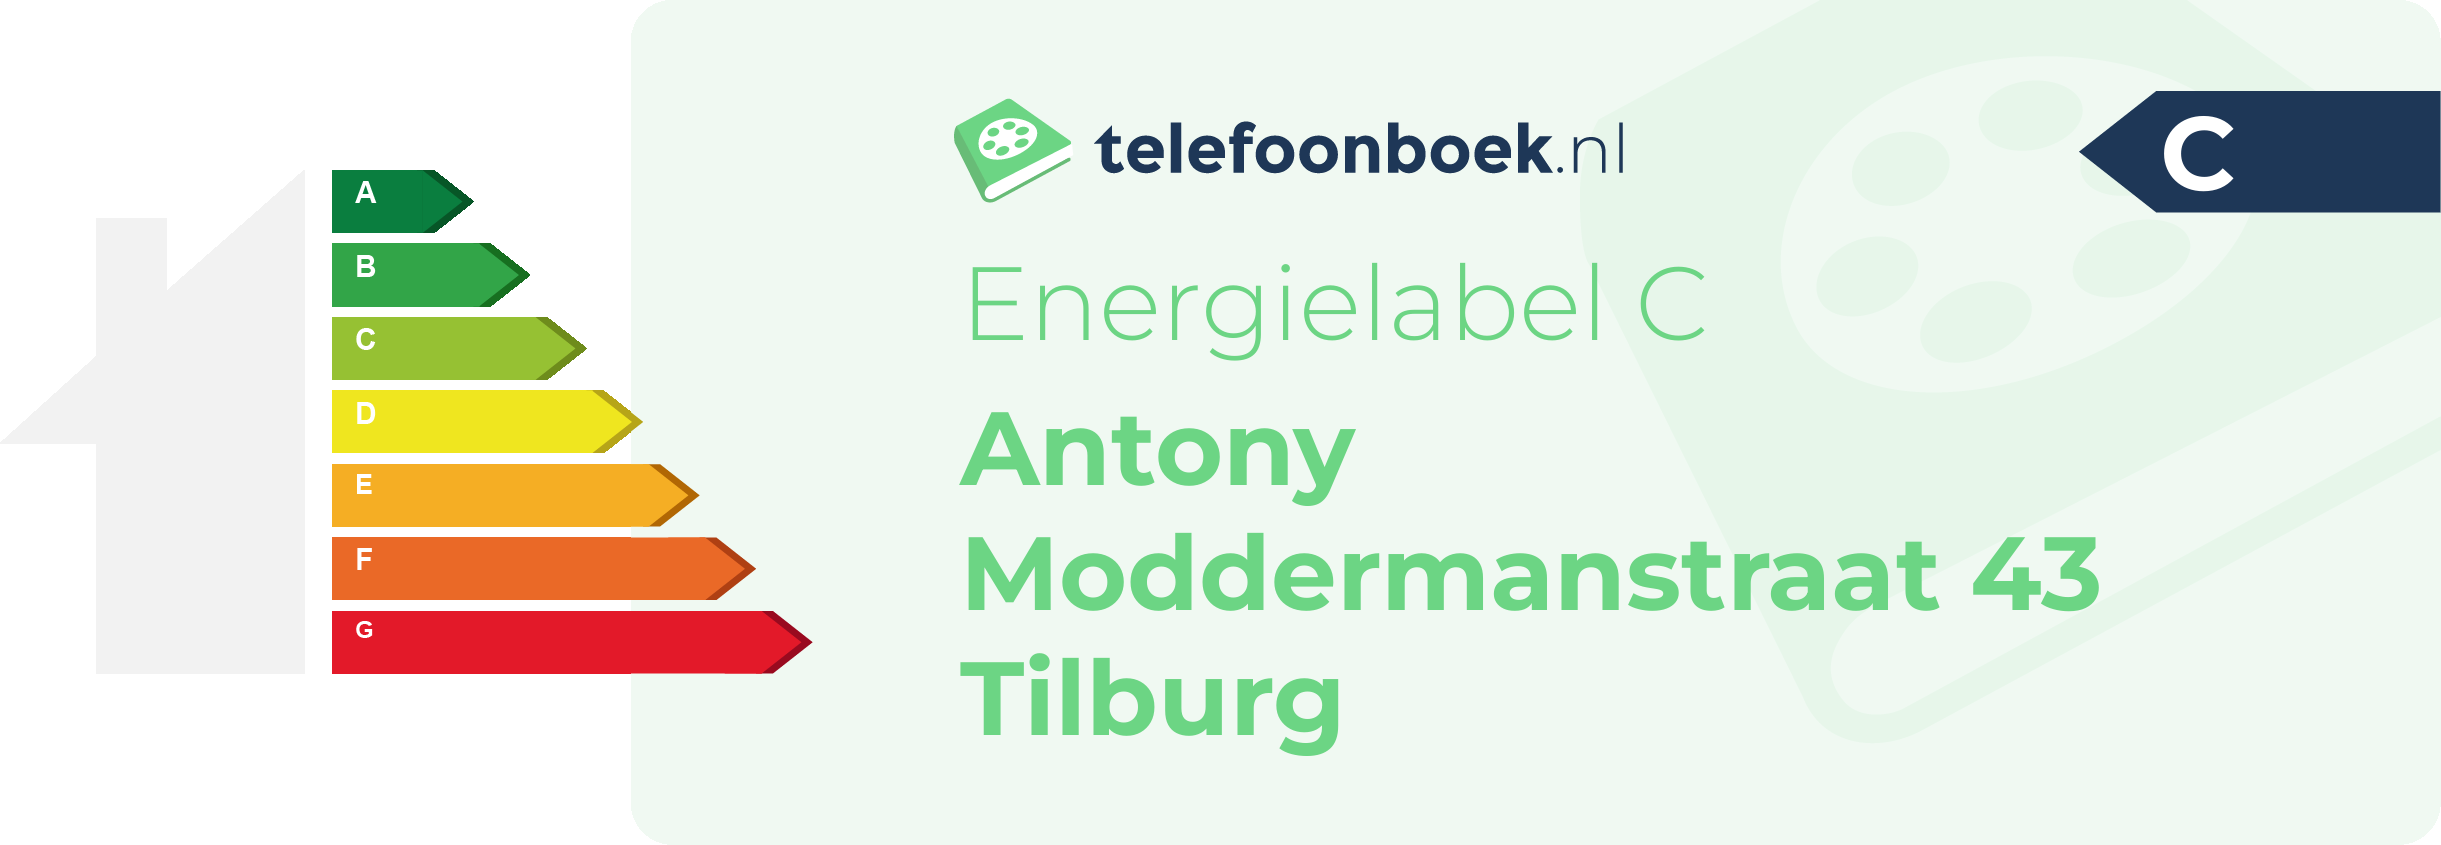 Energielabel Antony Moddermanstraat 43 Tilburg